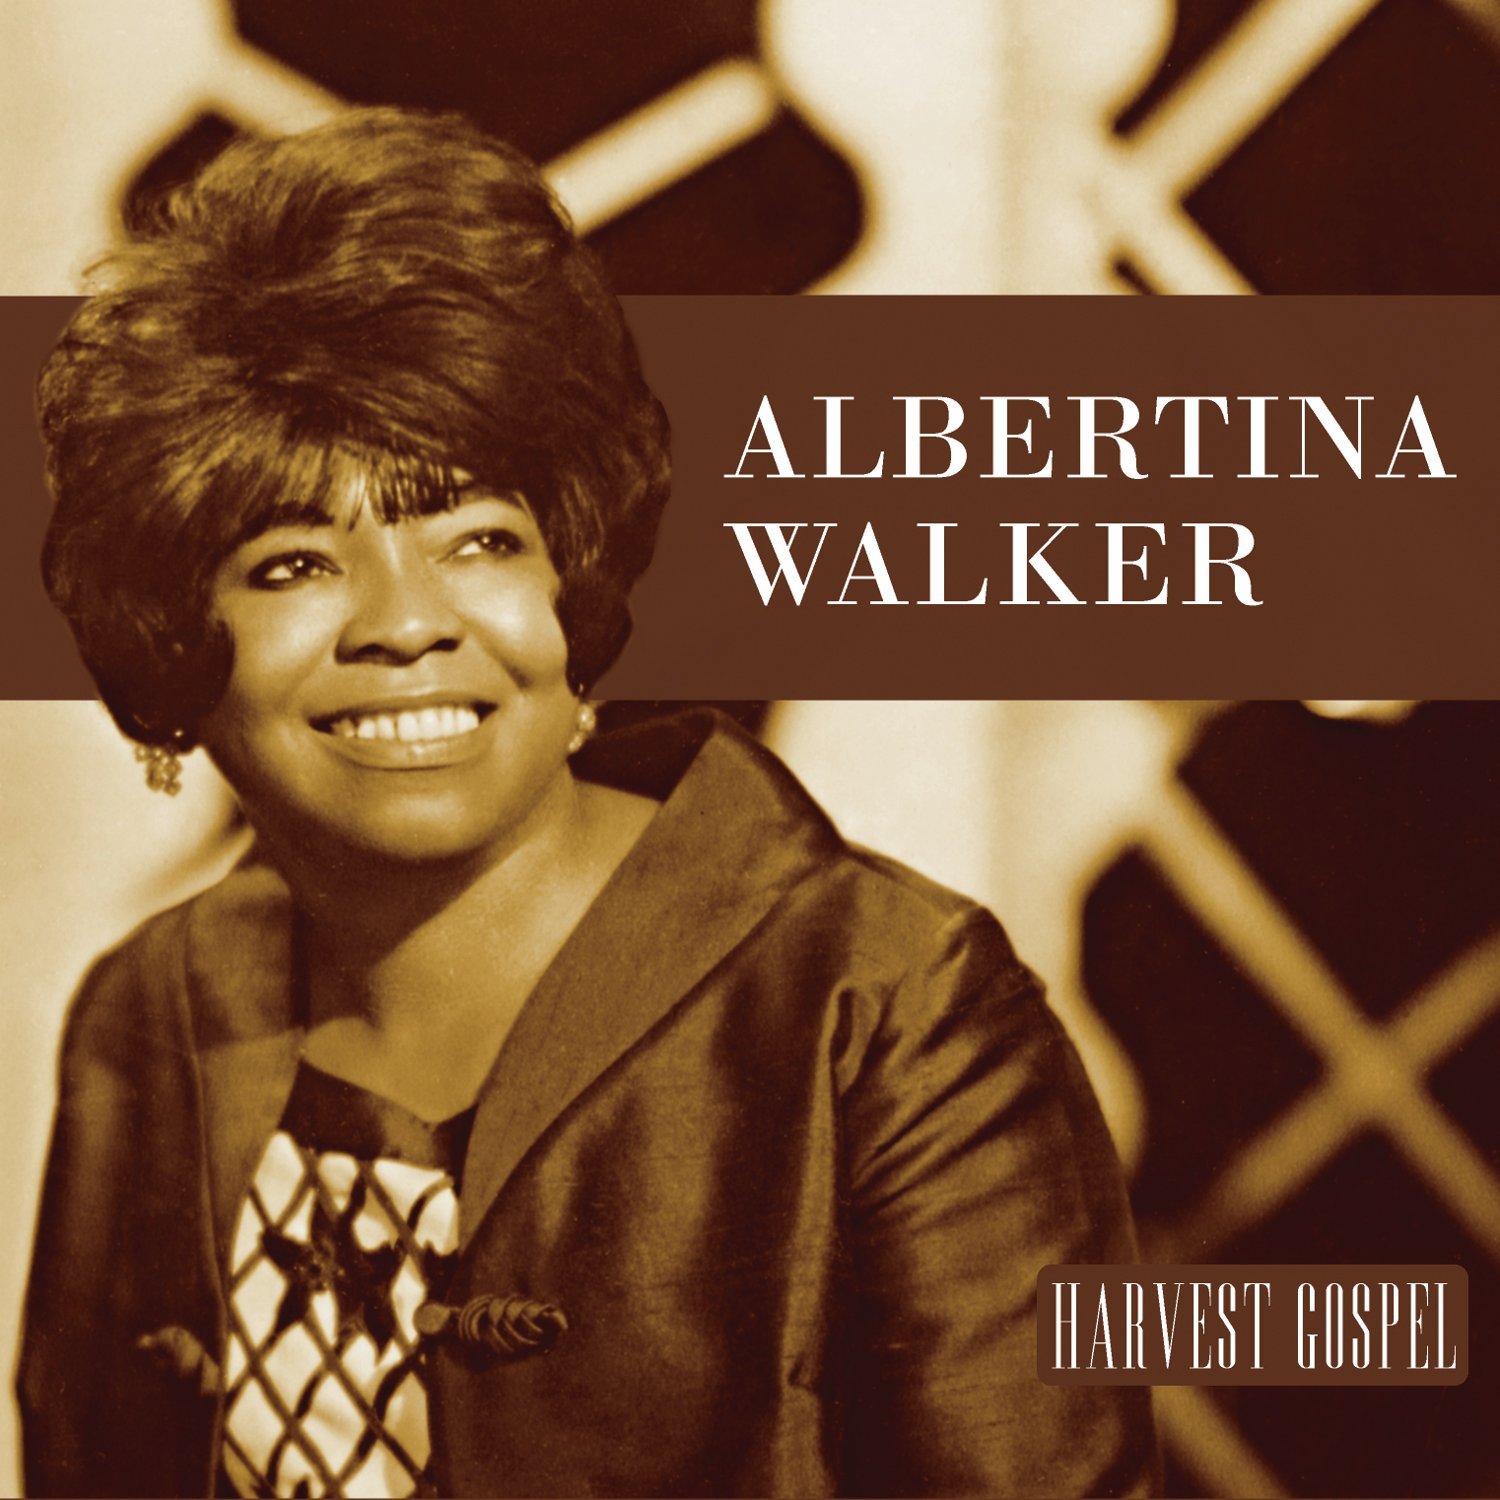 Harvest Gospel by Albertina Walker Album Cover